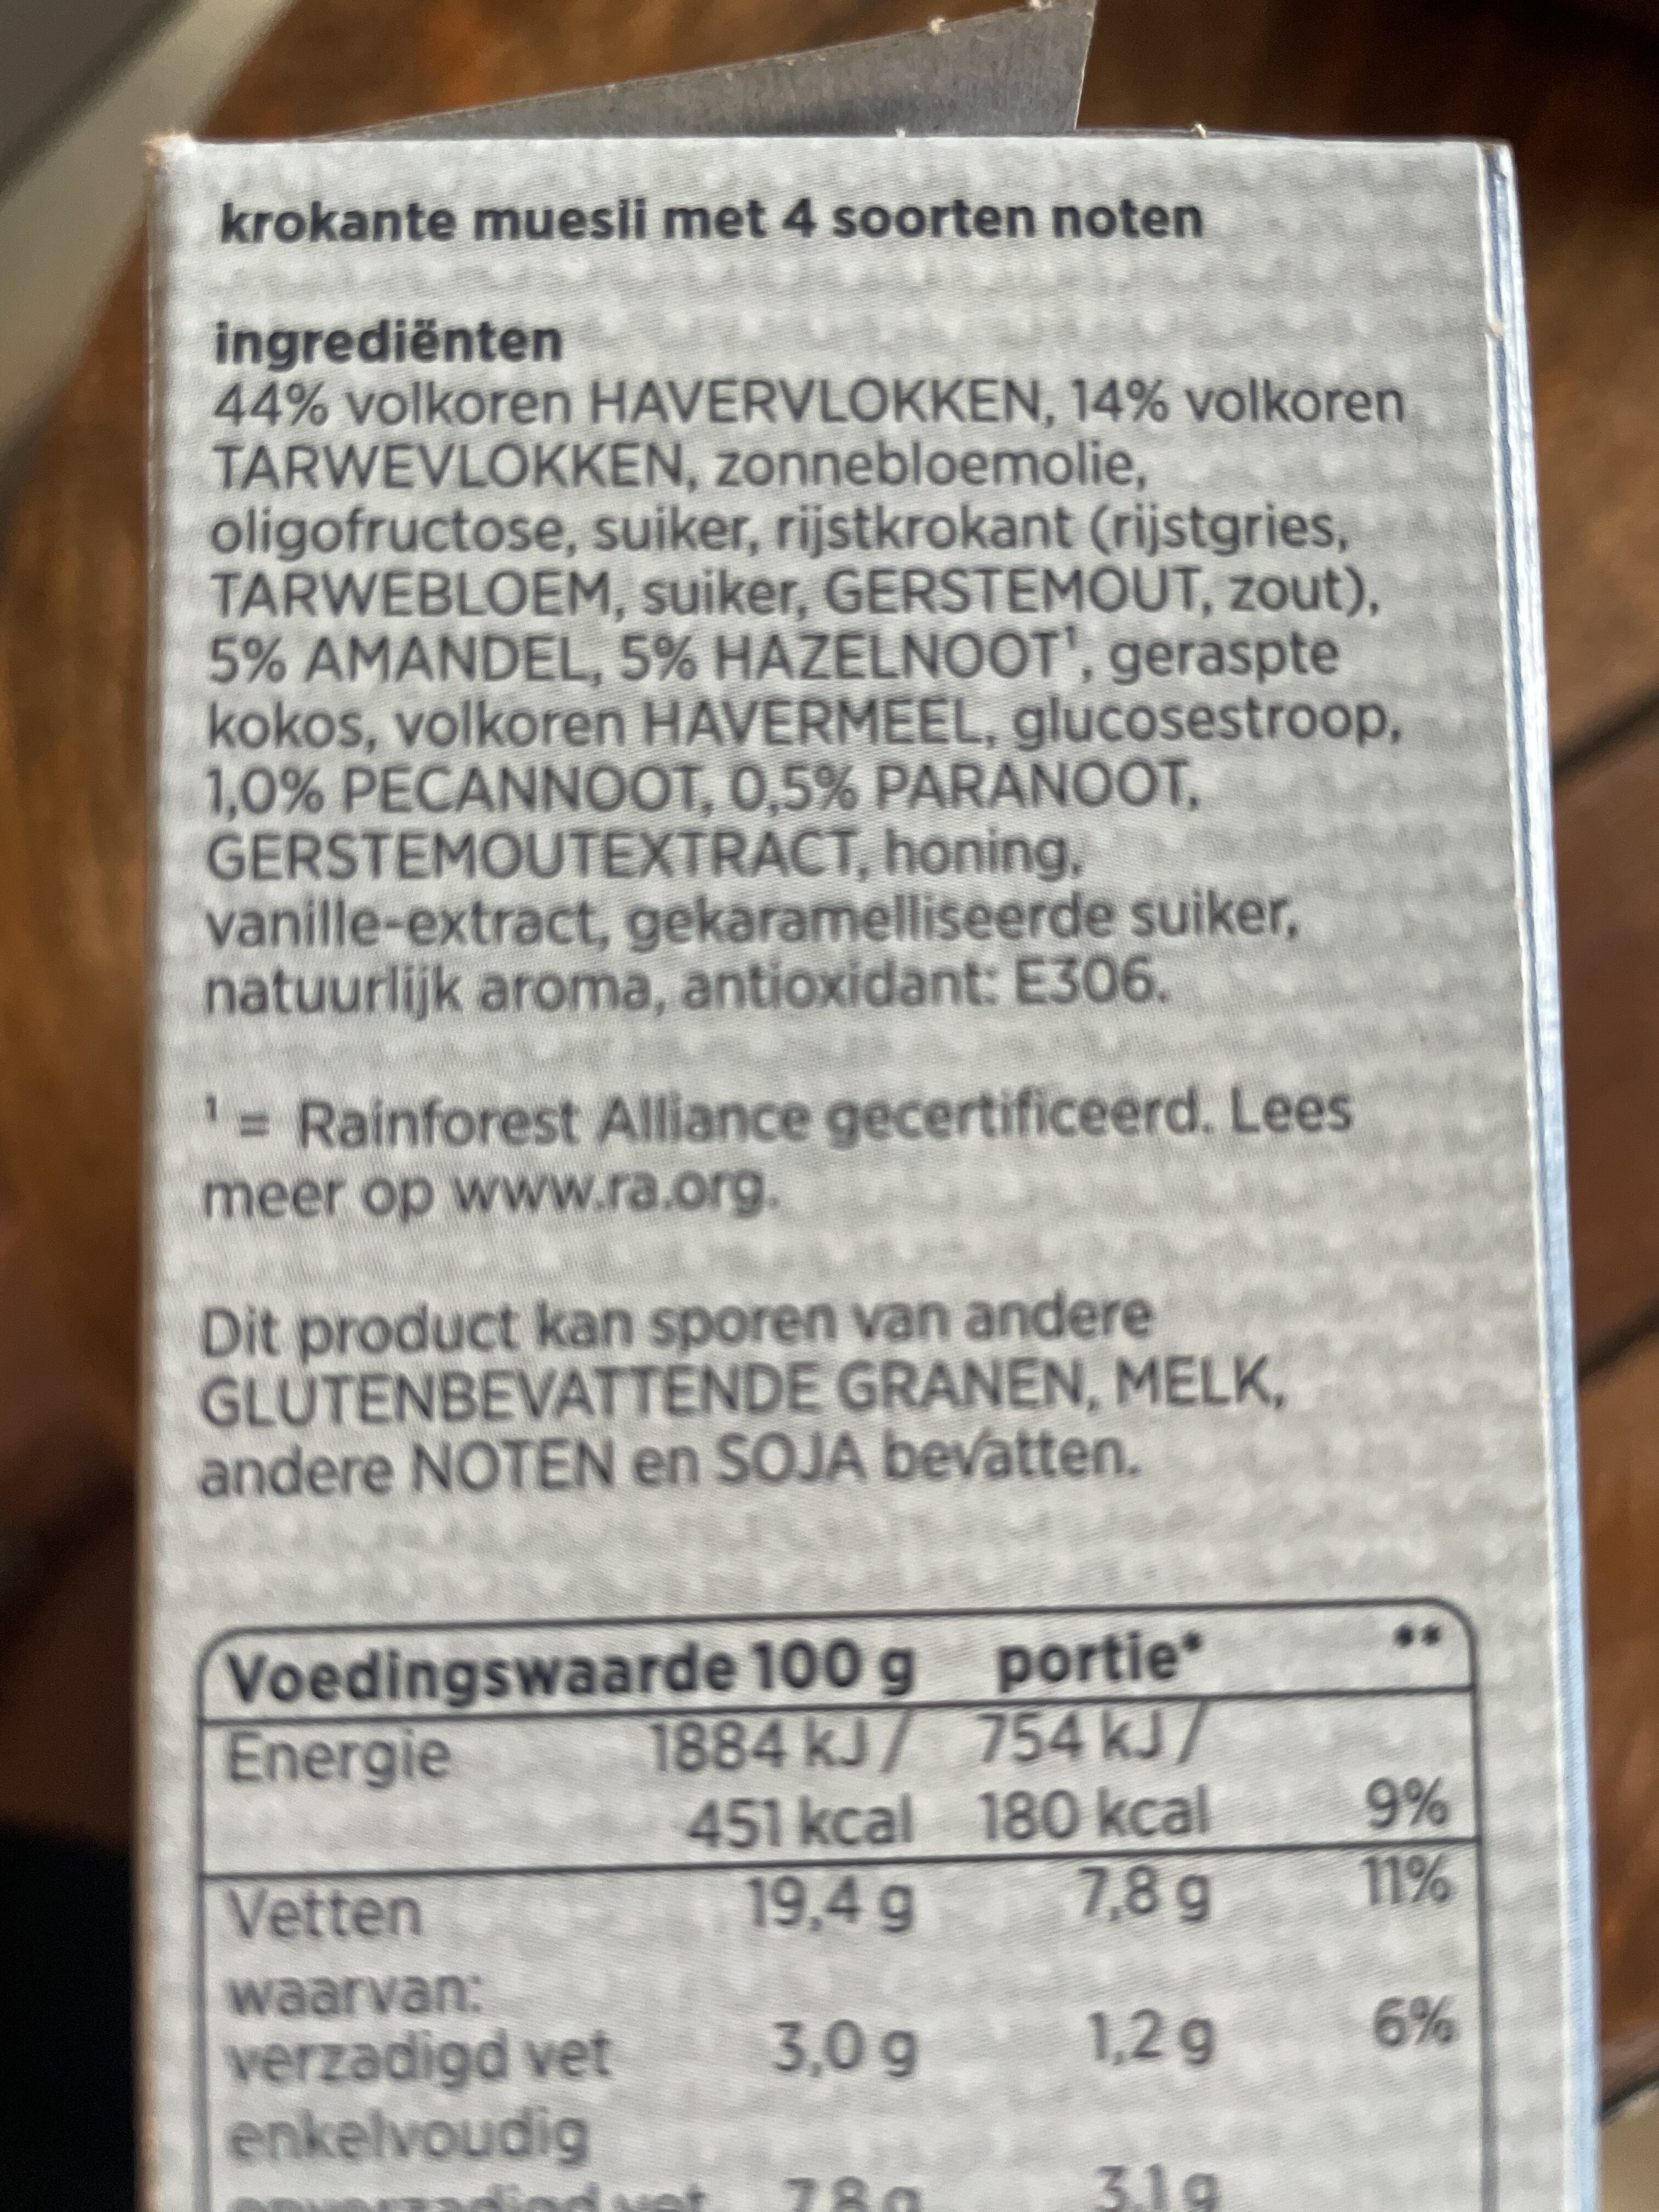 4 noten mix - Ingredients - nl